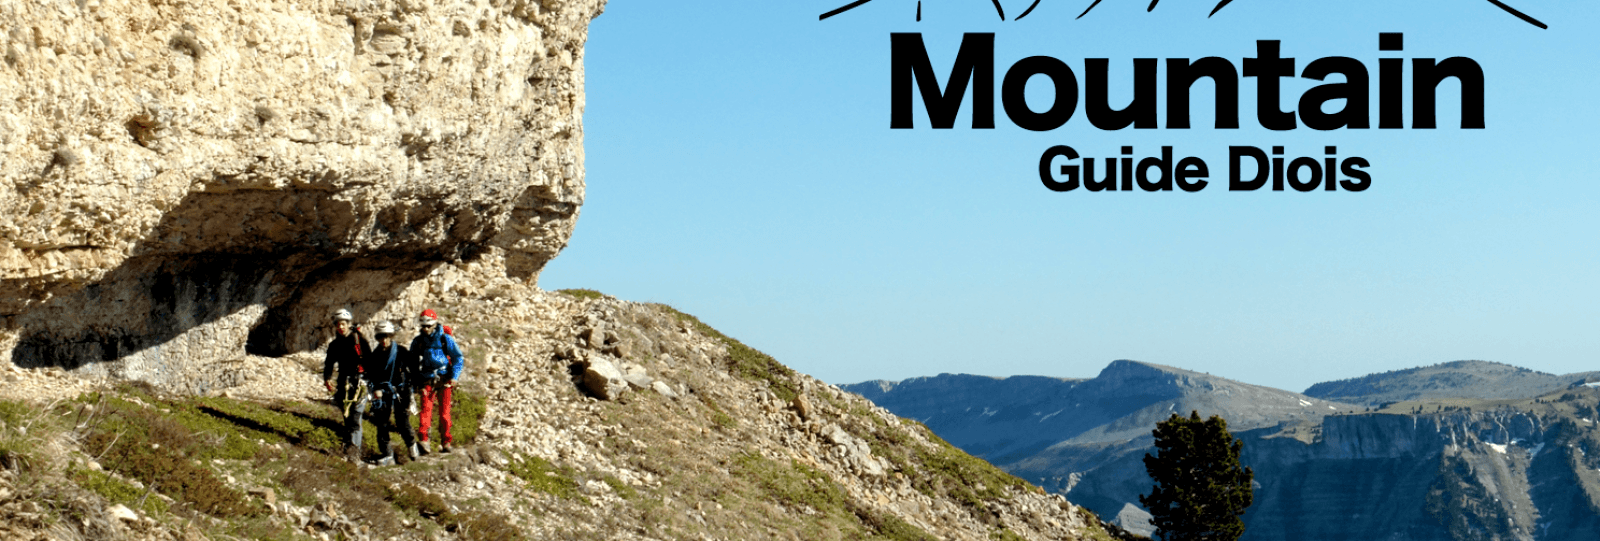 Mountain Guide Diois